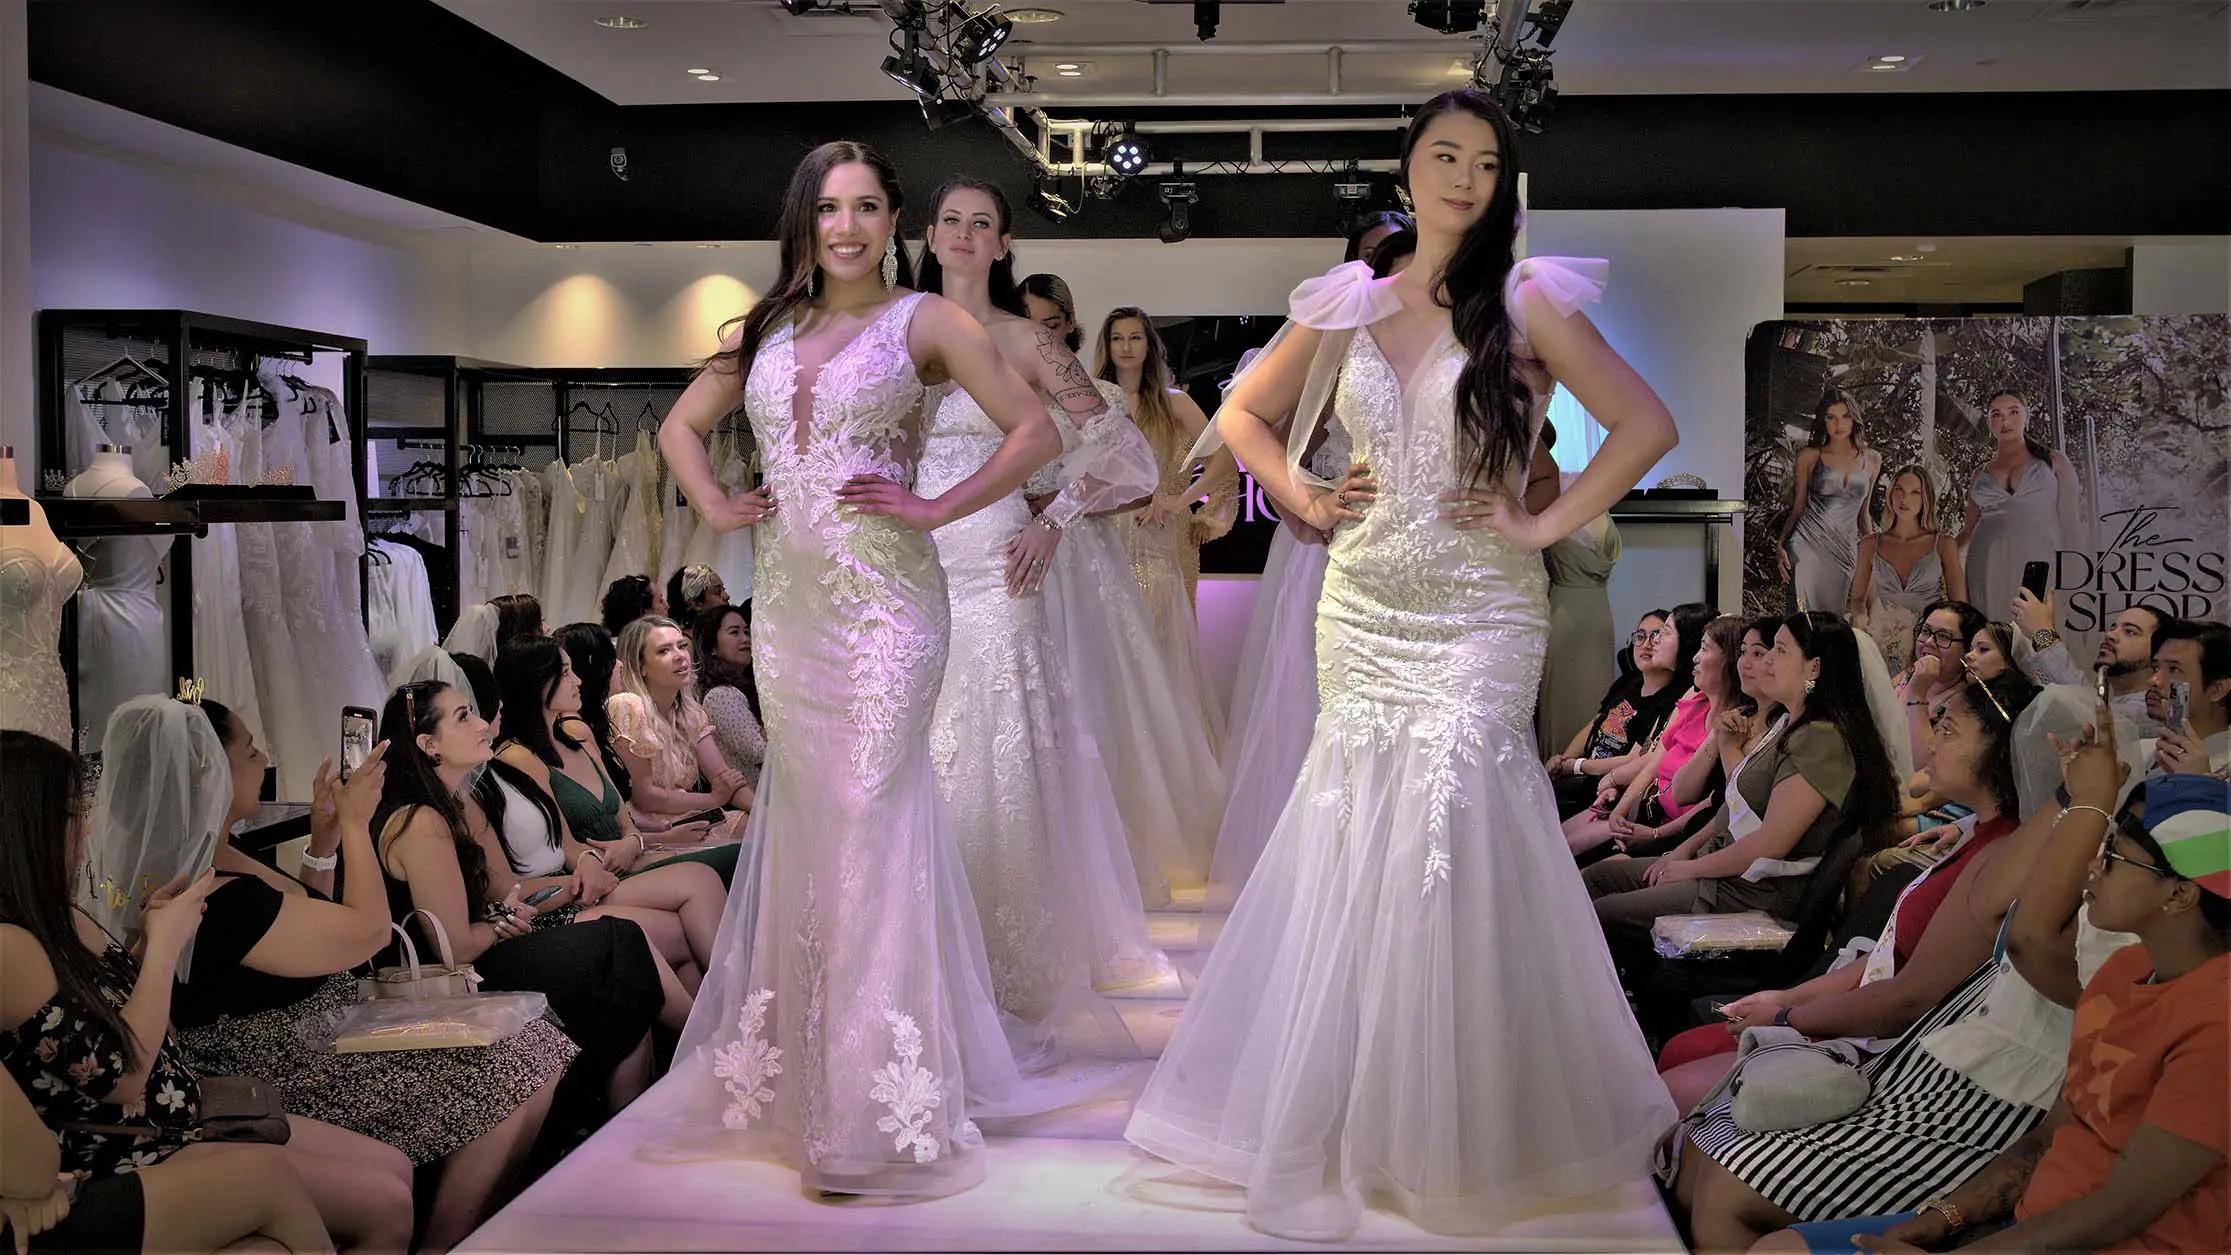 Bridal Bliss Unveiled: The Dress Shop Las Vegas Hosts Spectacular Bridal Fashion Show Image